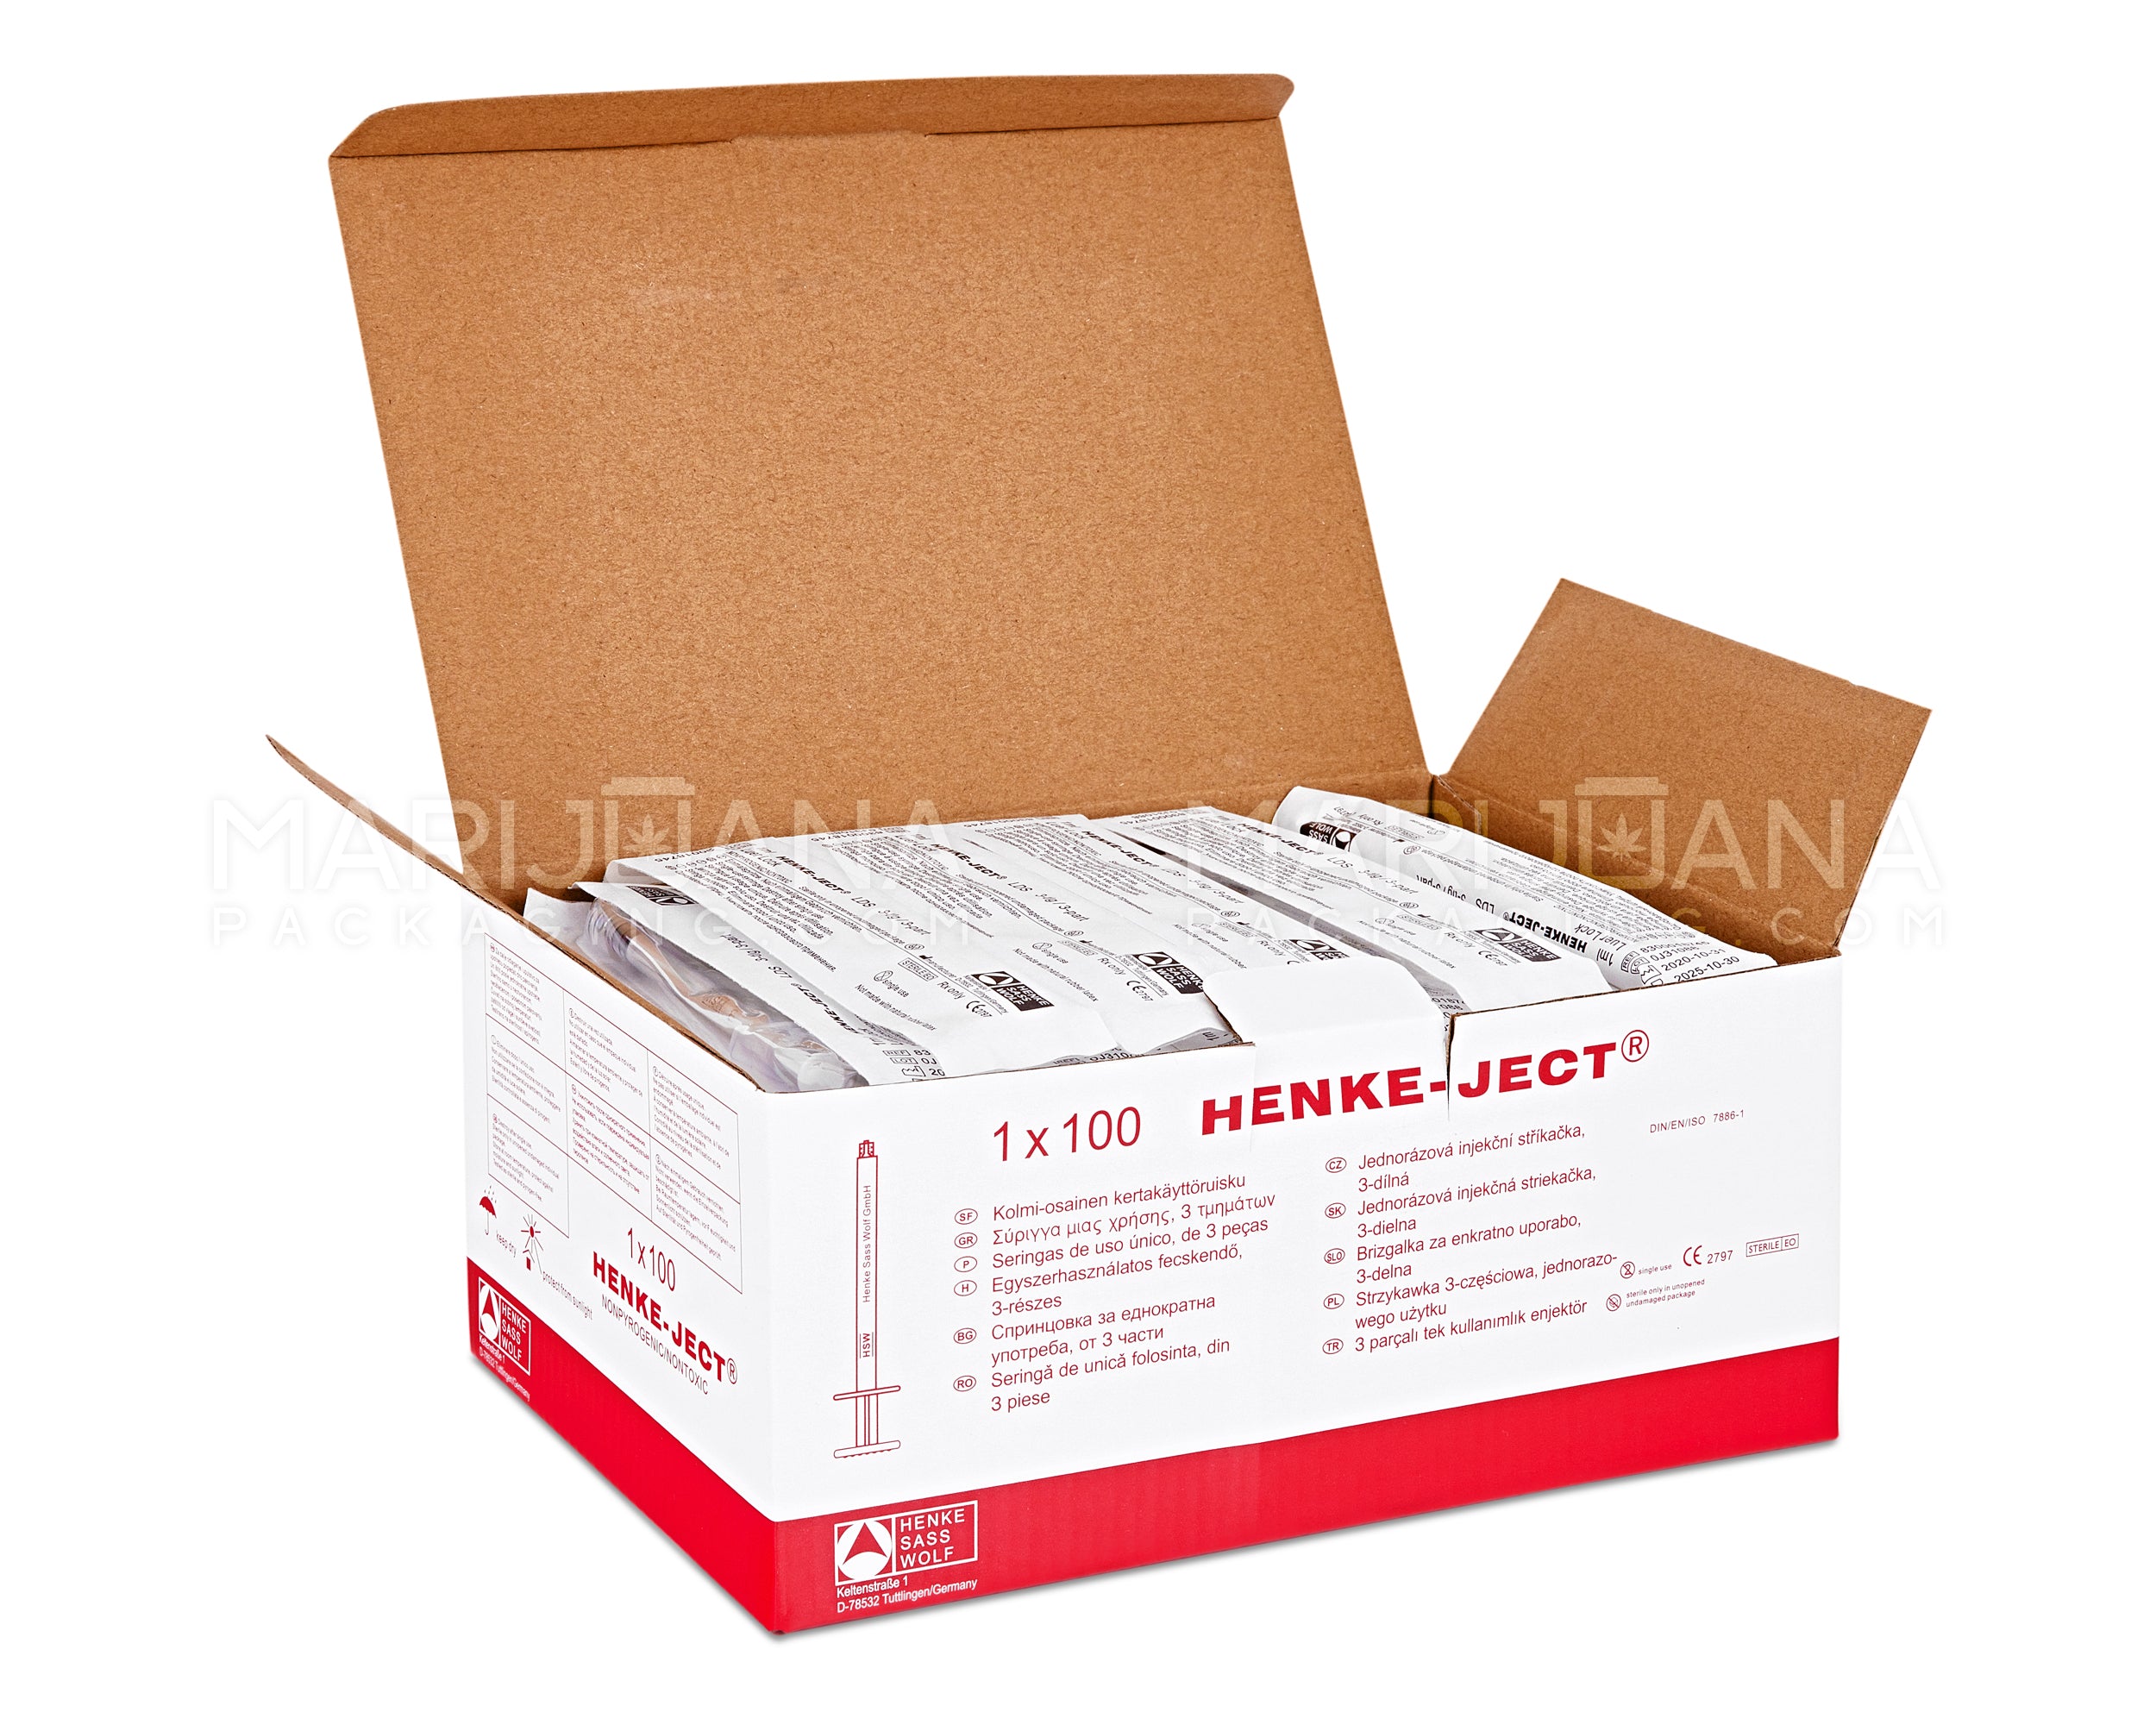 Luer Lock | Plastic Dab Applicator Syringes | 1mL - 0.1mL Increments - 100 Count - 9